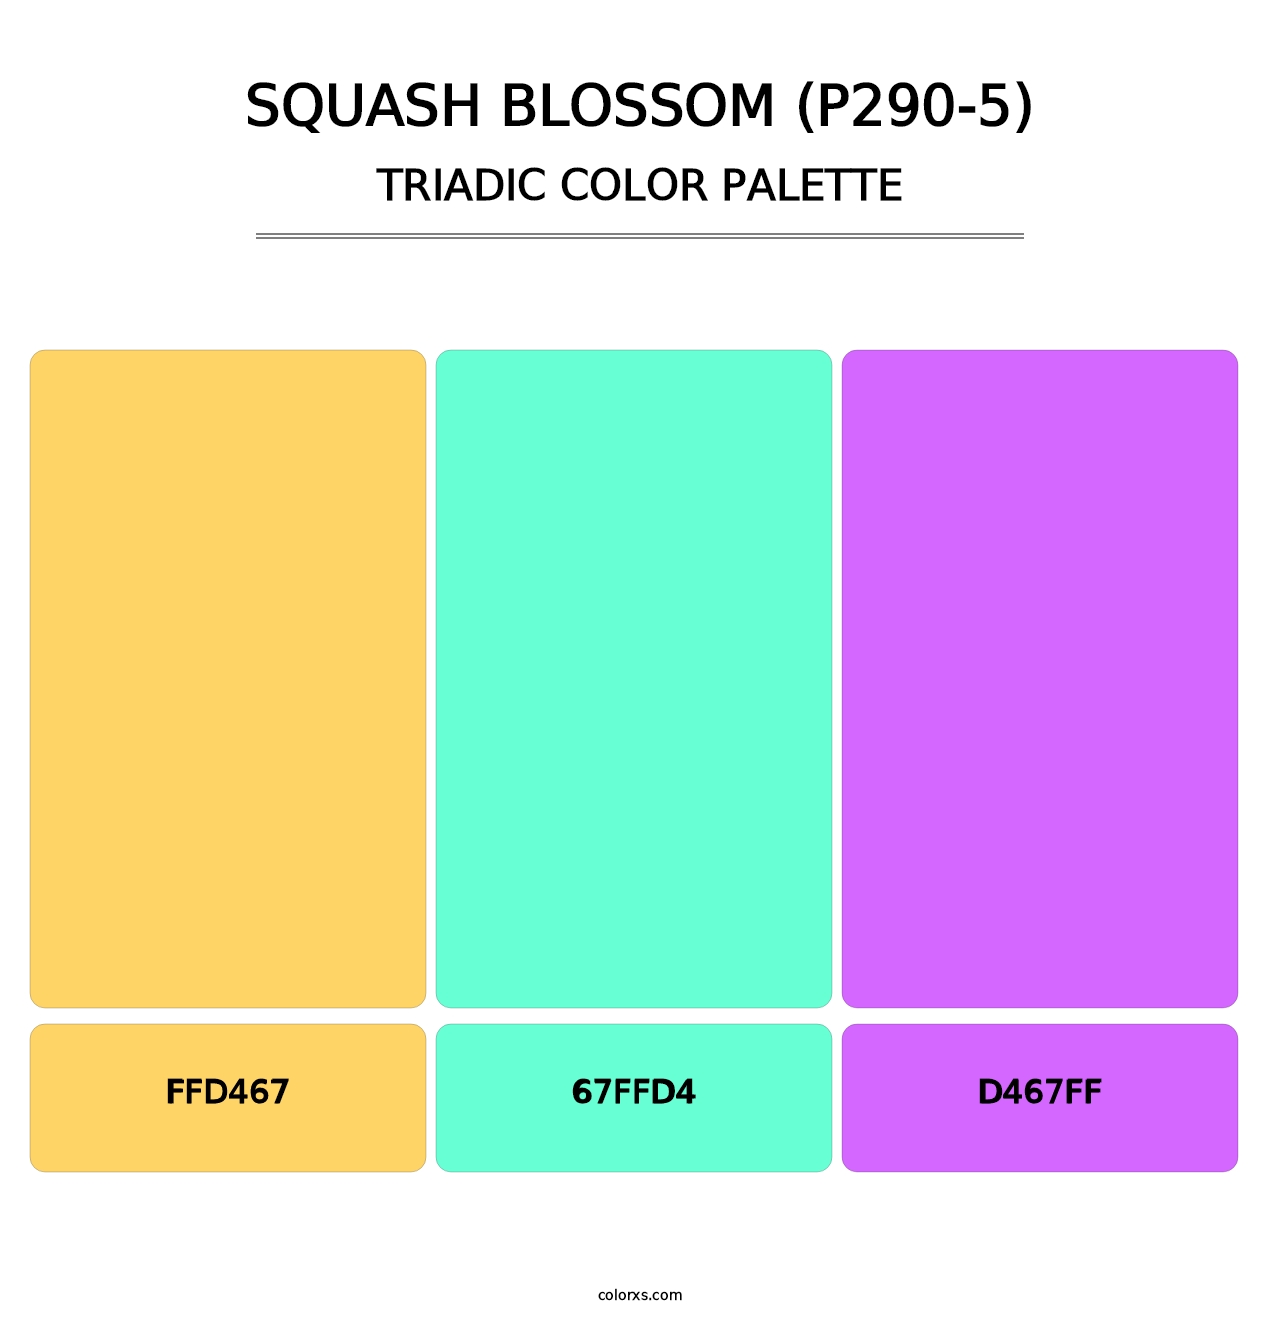 Squash Blossom (P290-5) - Triadic Color Palette